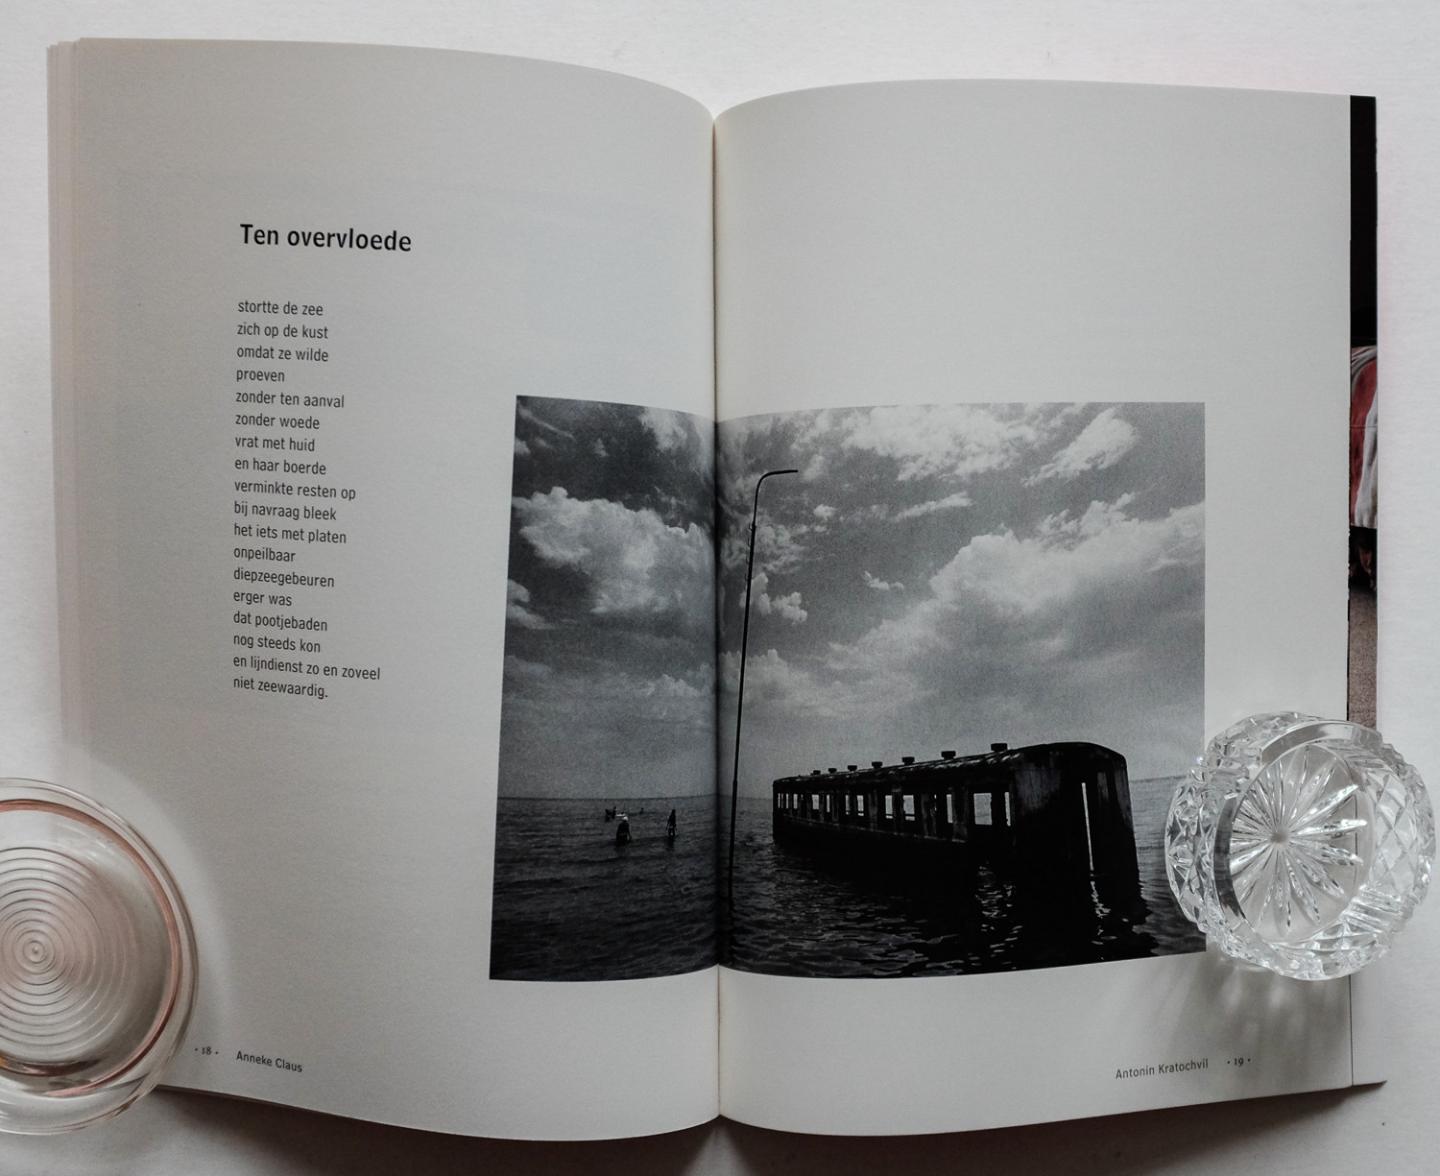 Glas, Jan e.a. - Dichters in het Noorderlicht - foto's en poëzie